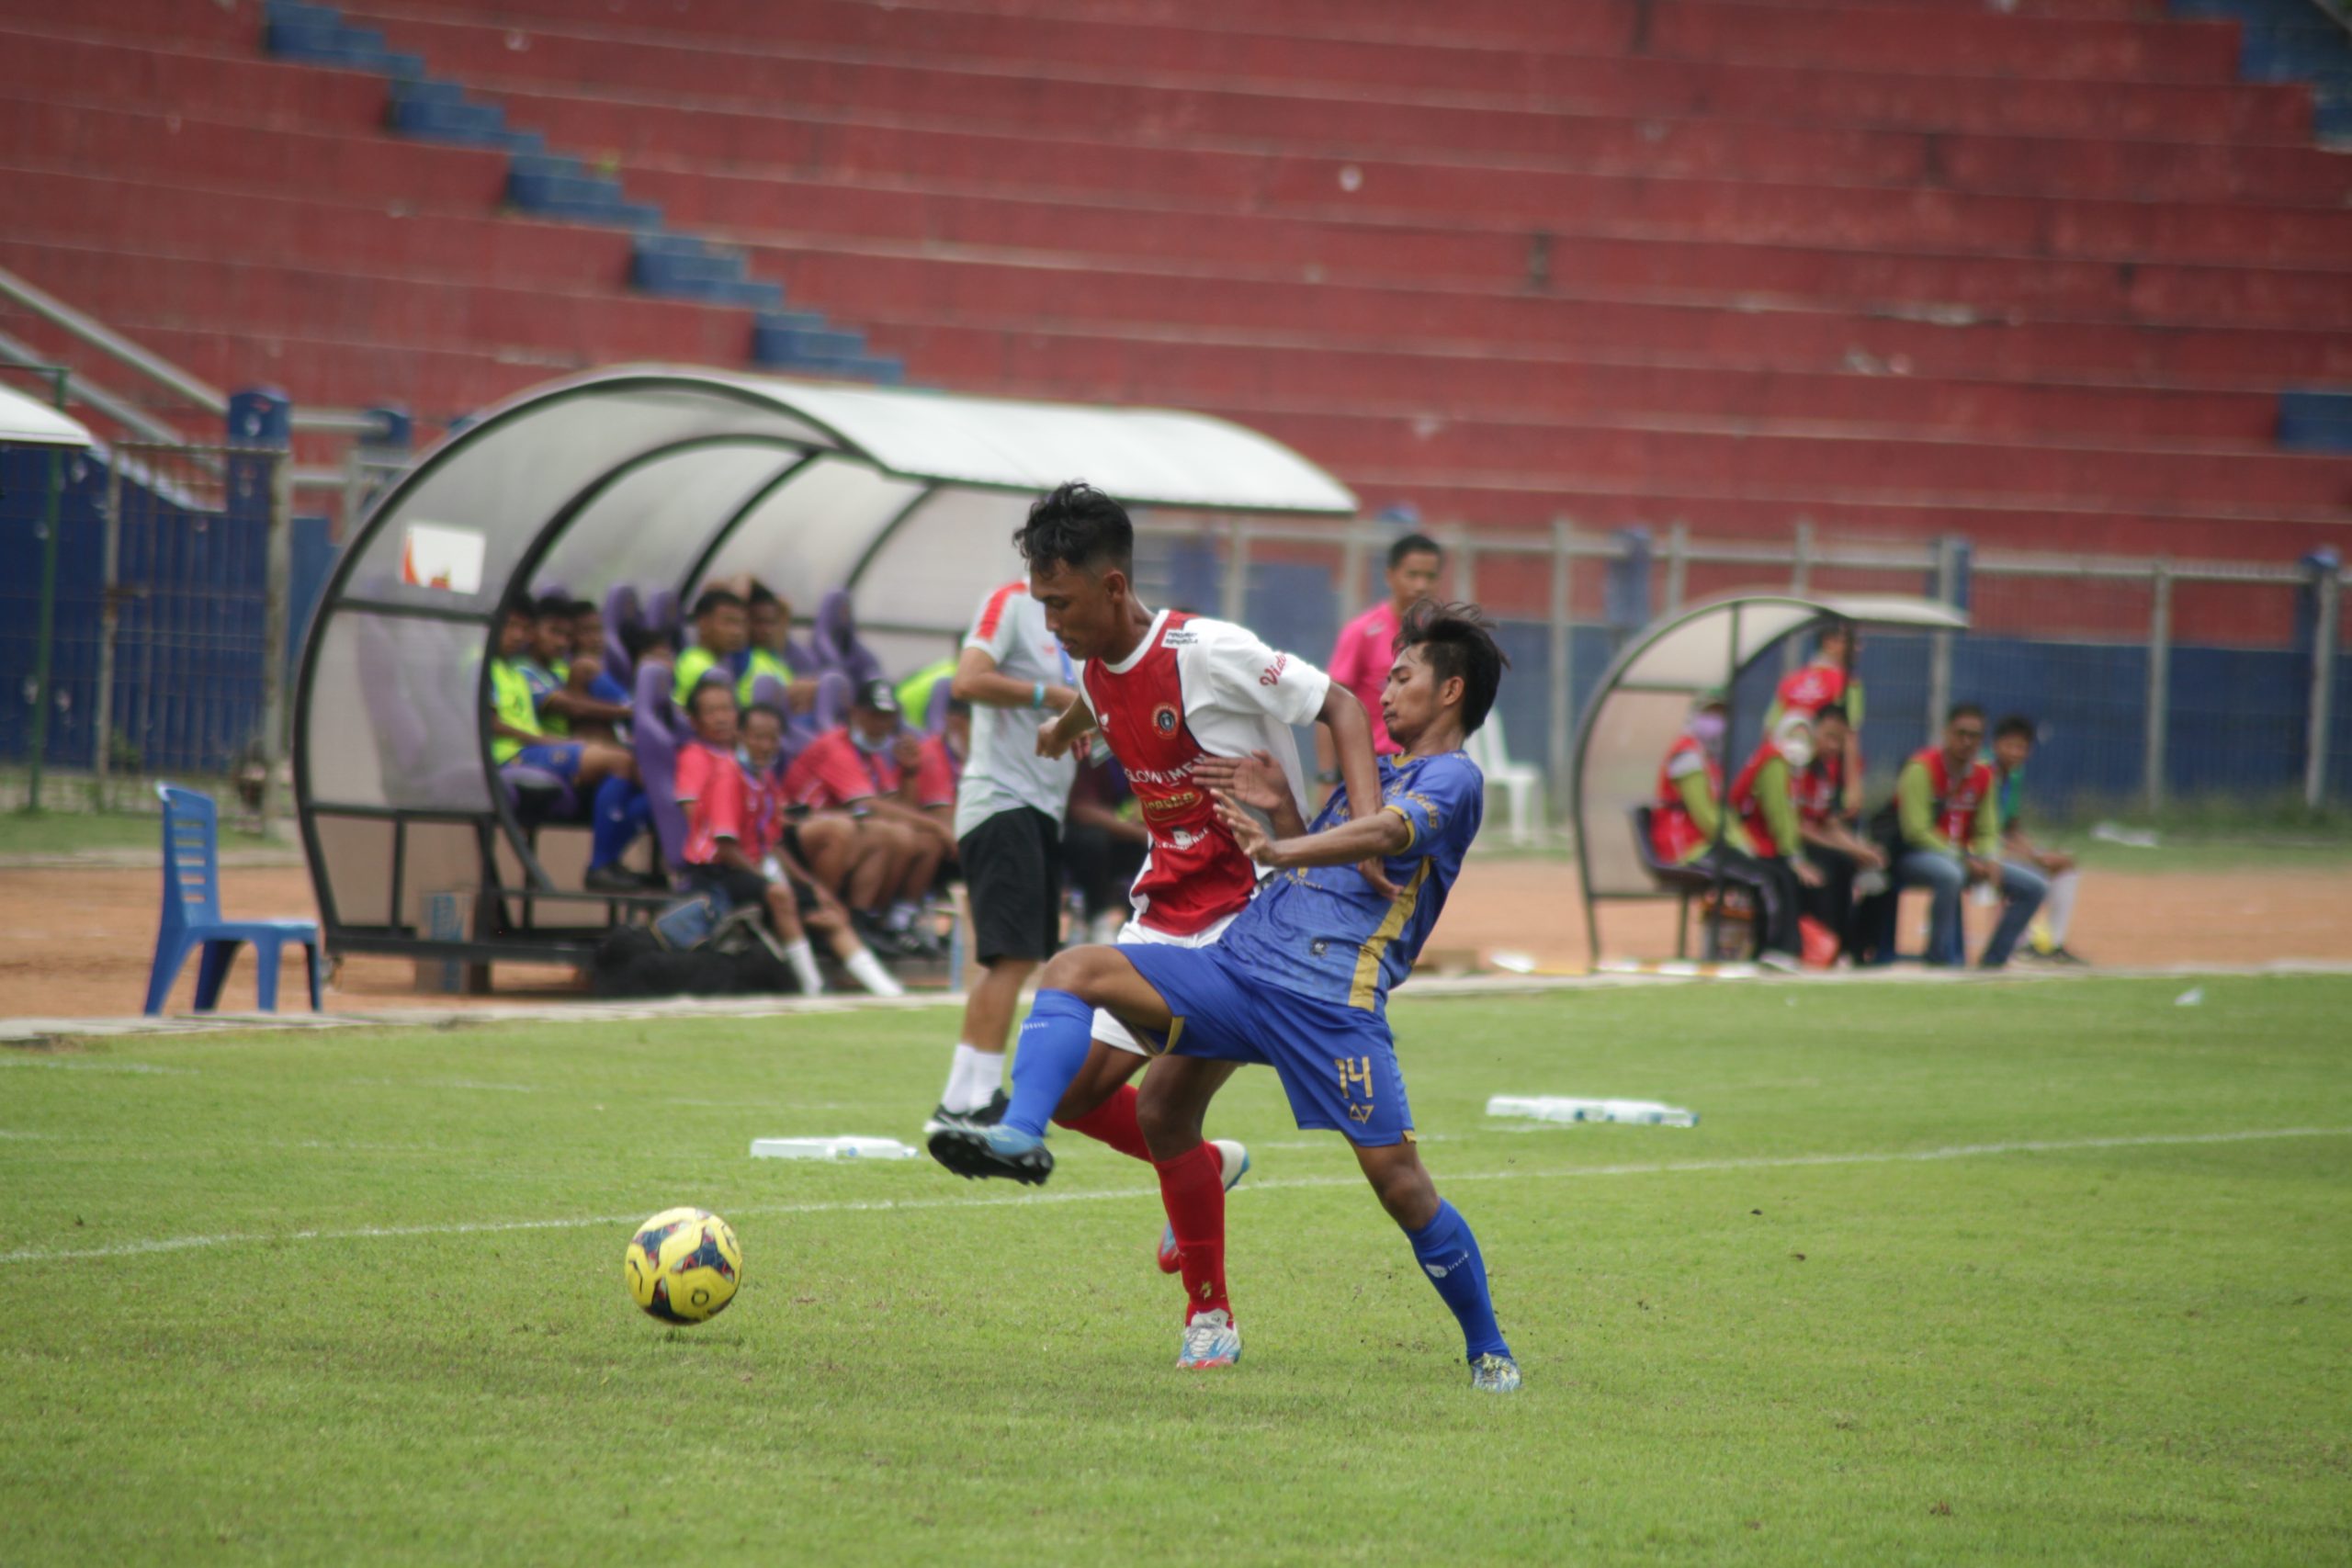 Persedikab Kediri (merah) saat melawan Persem Mojokerto di Stadion Brawijaya, Kediri. (ist)